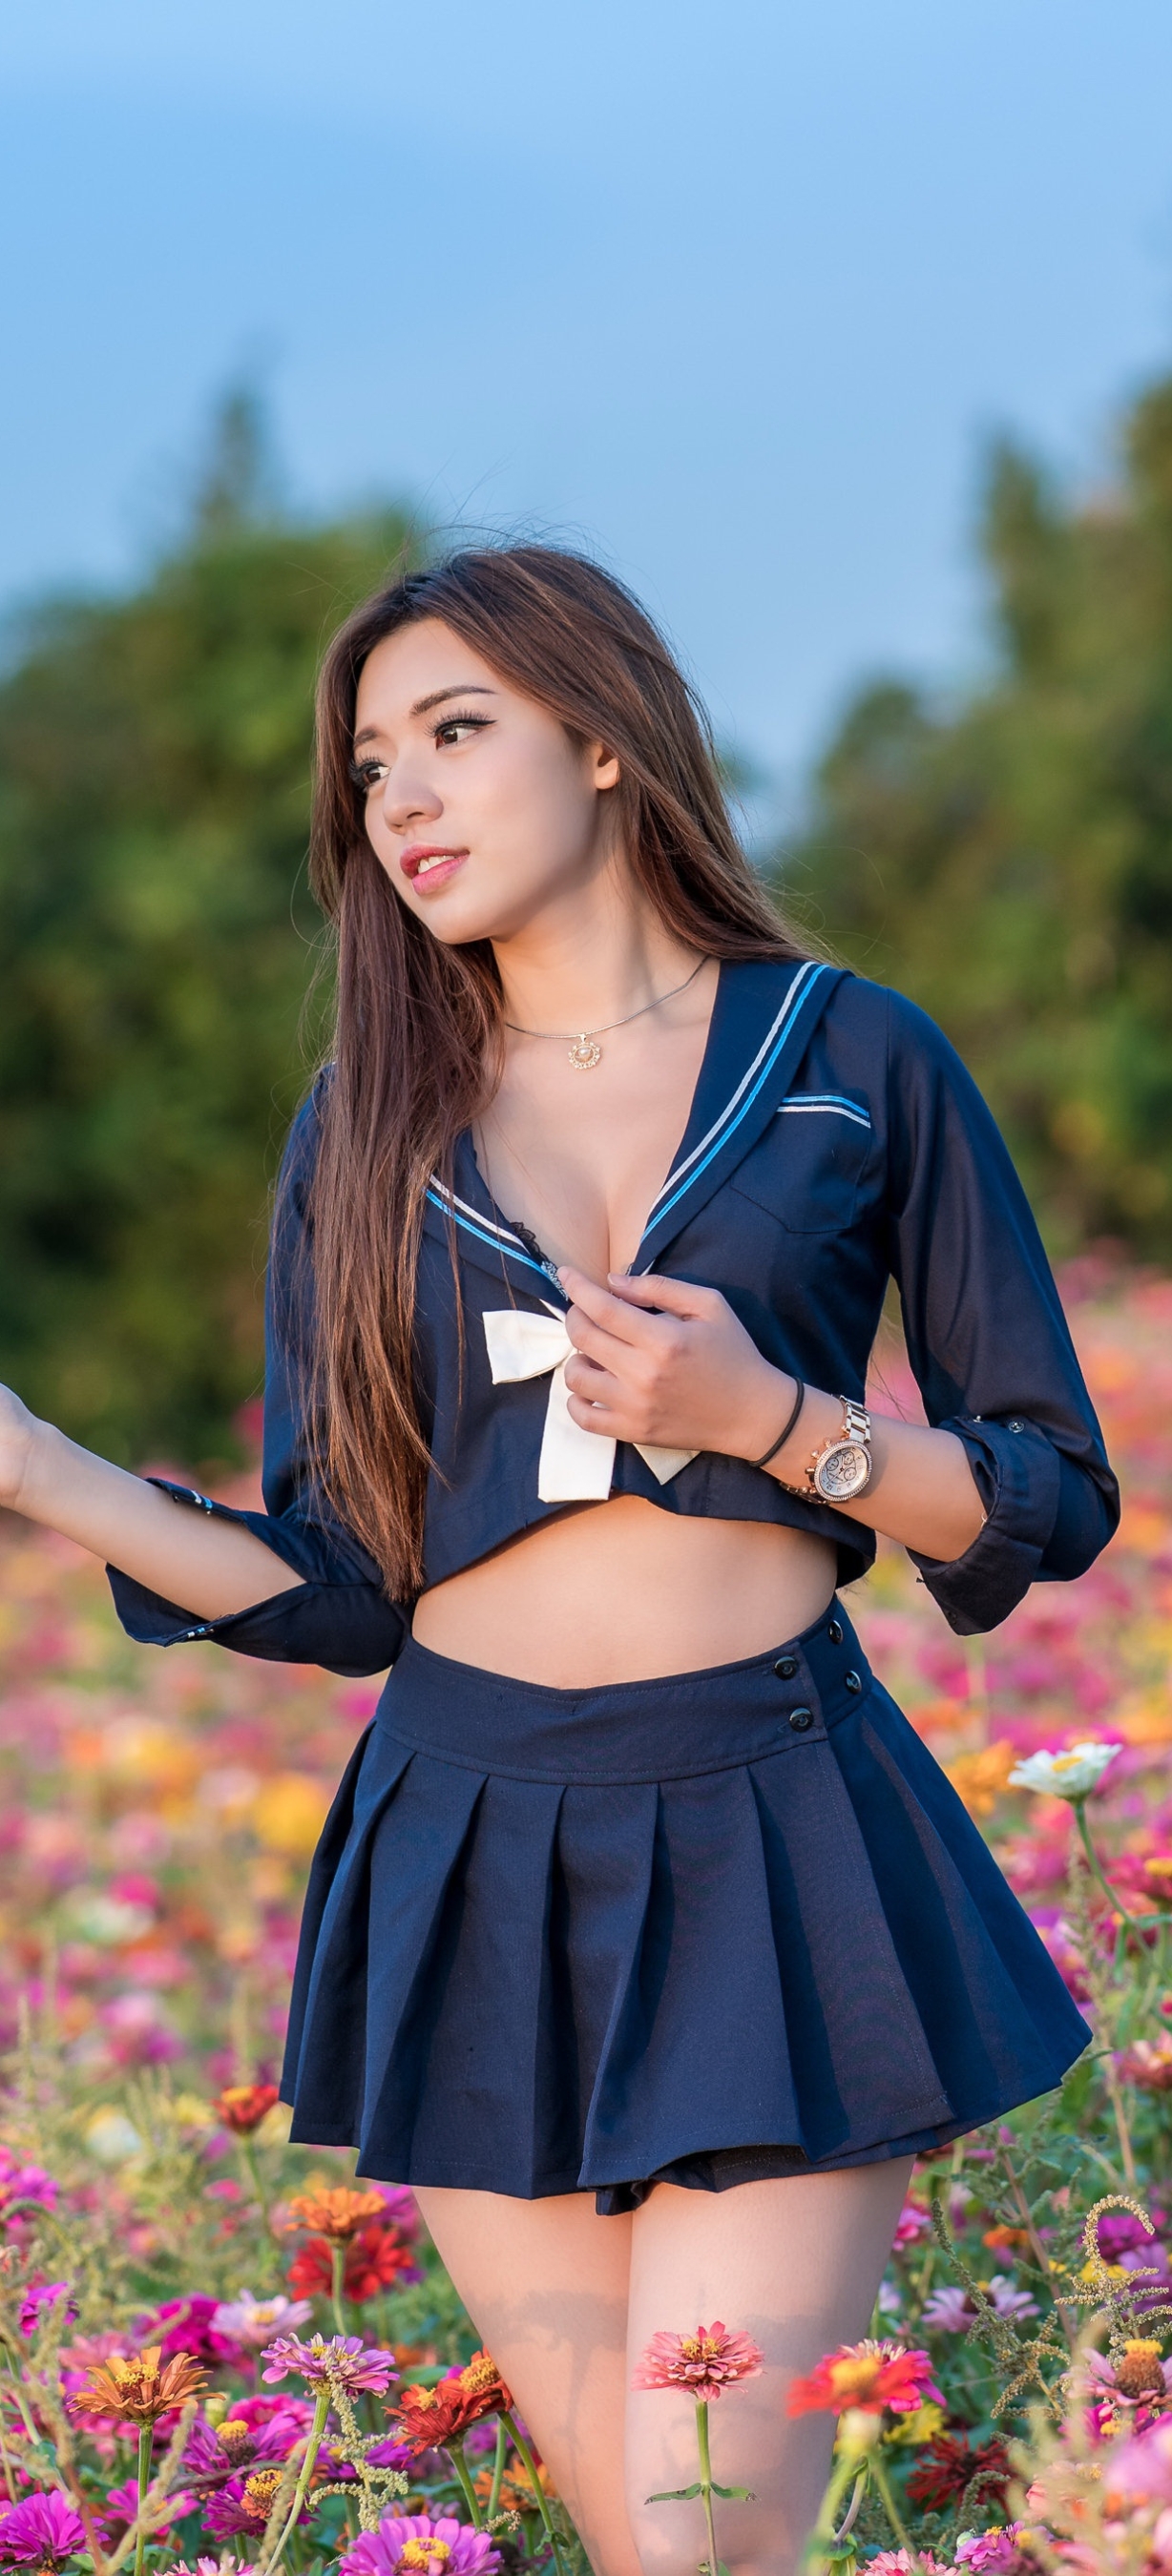 Chinese Model Sailor Uniform Bare Midriff Skirt Women Outdoors Asian 1228x2700